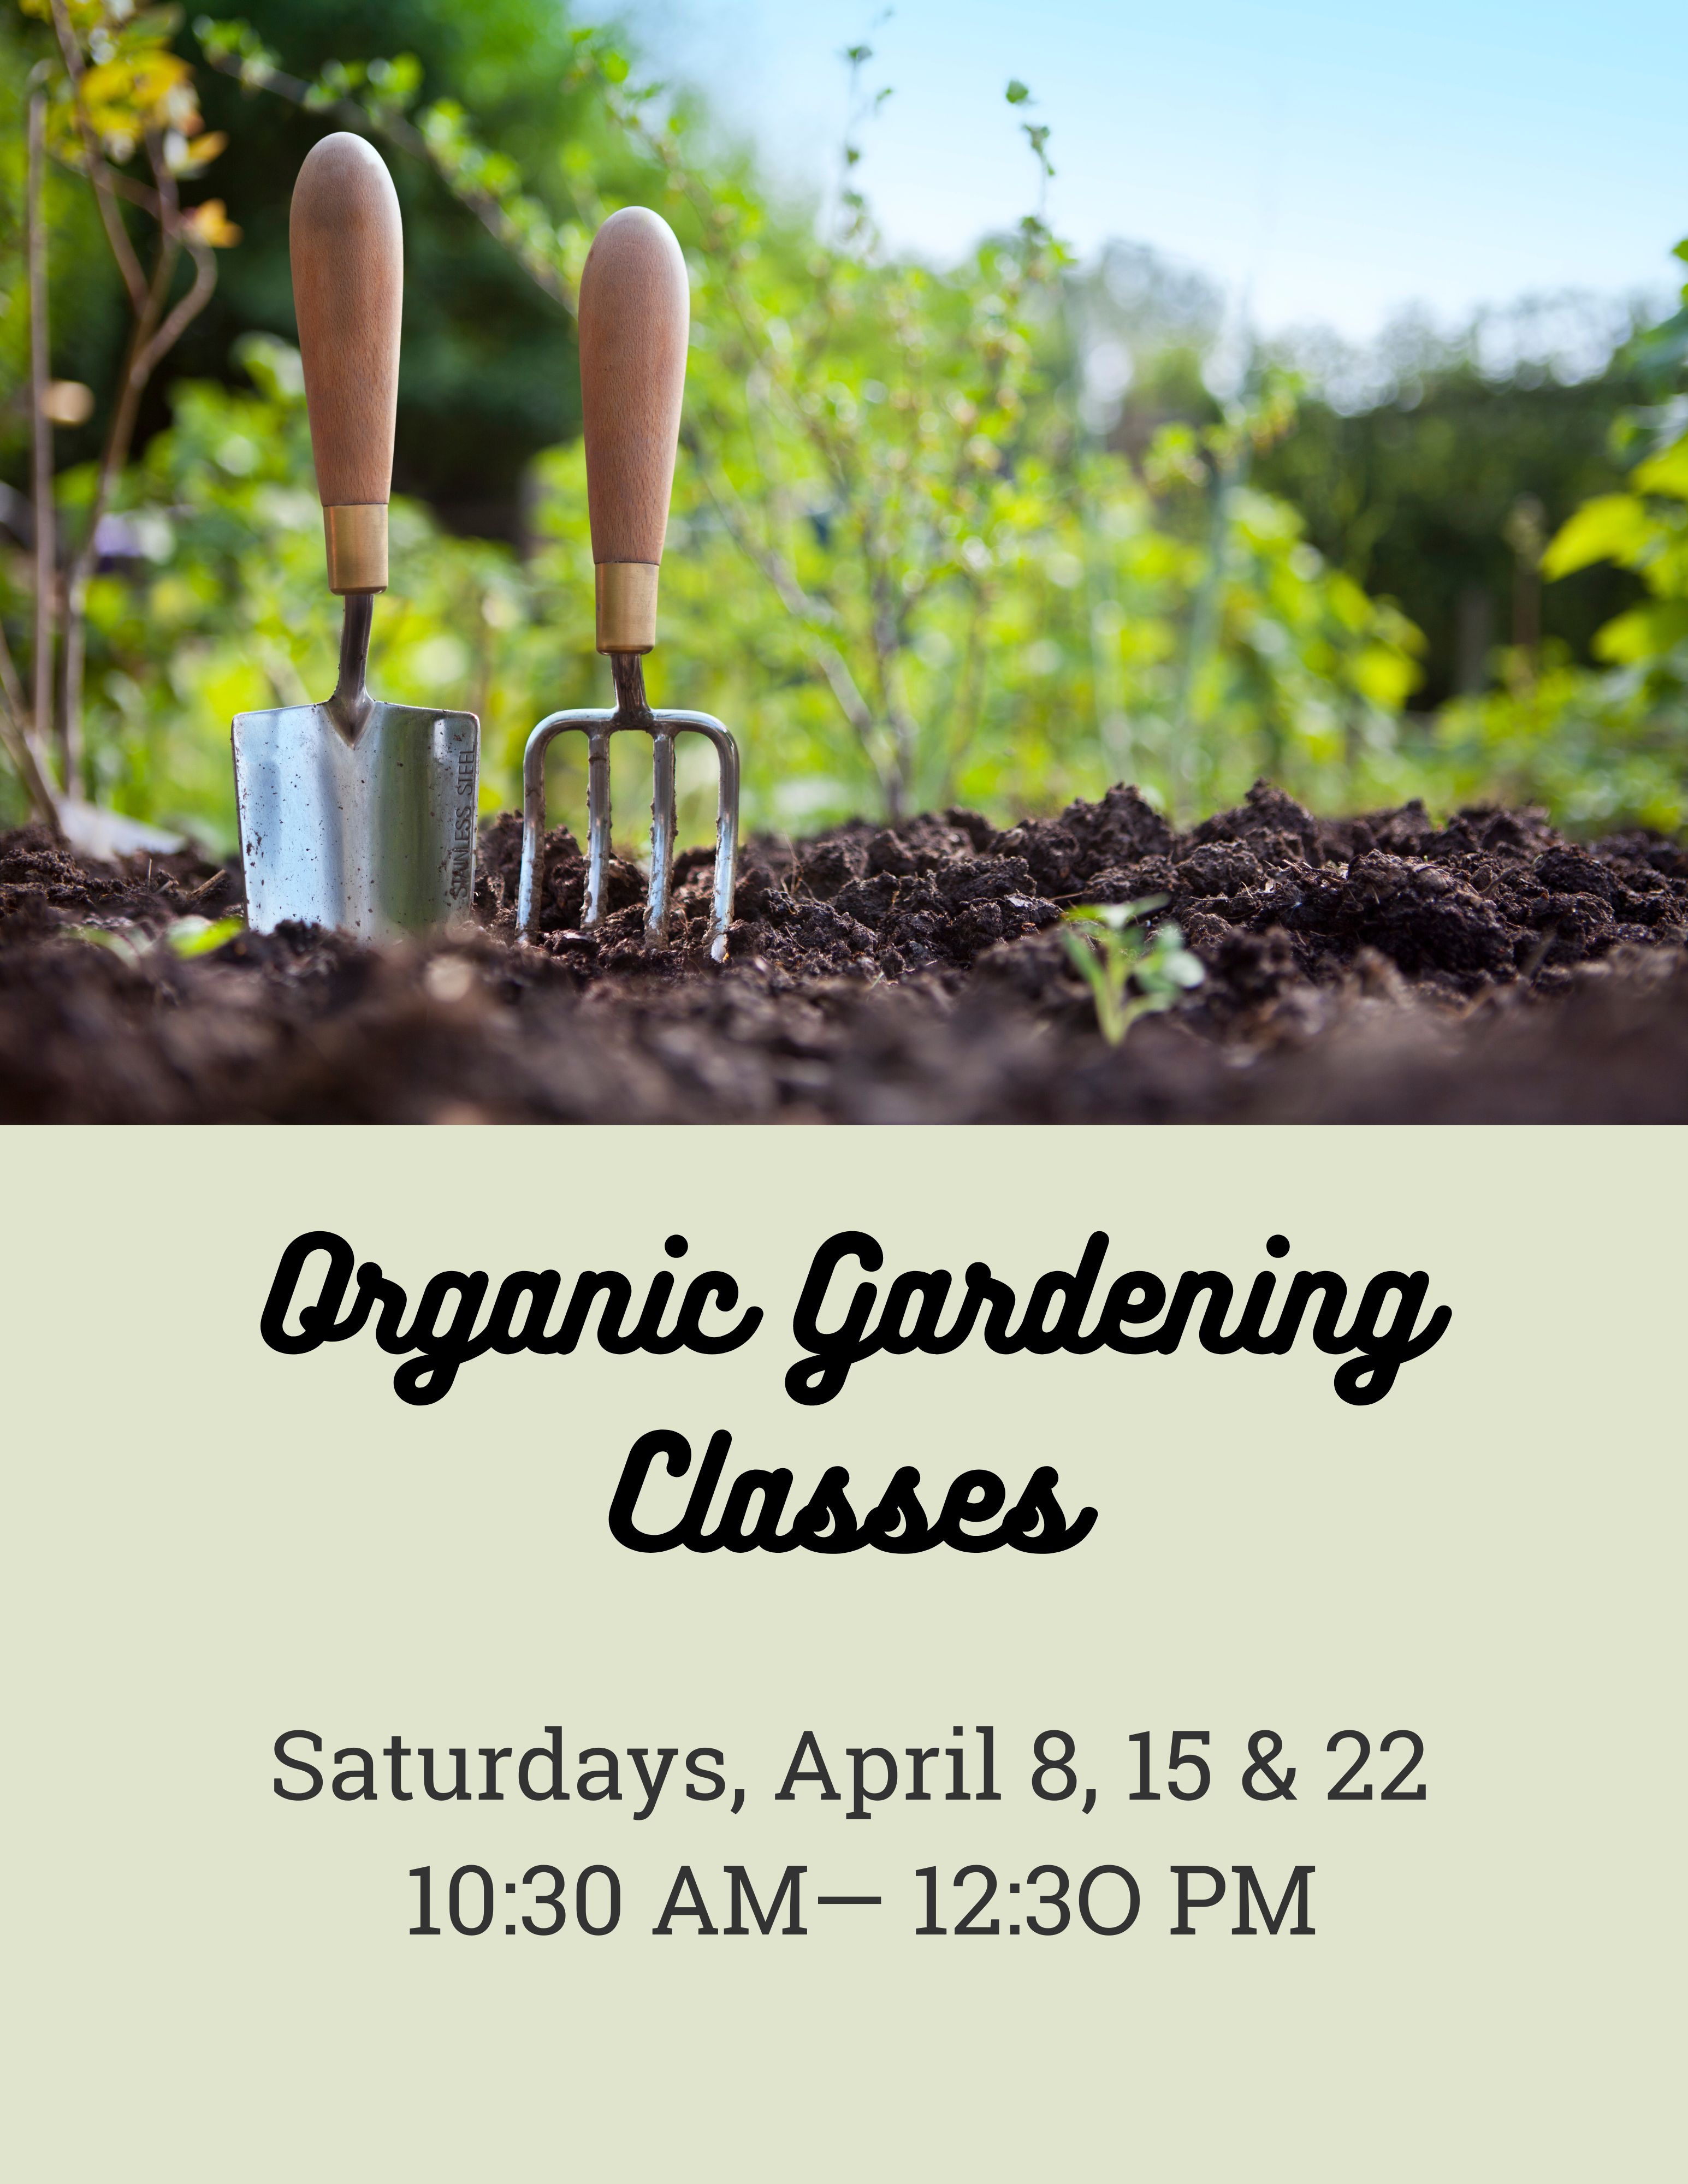 Organic Gardening Classes garden tools in rich soil Saturdays April 8, 15 & 22 10:30 AM to 12:30 PM